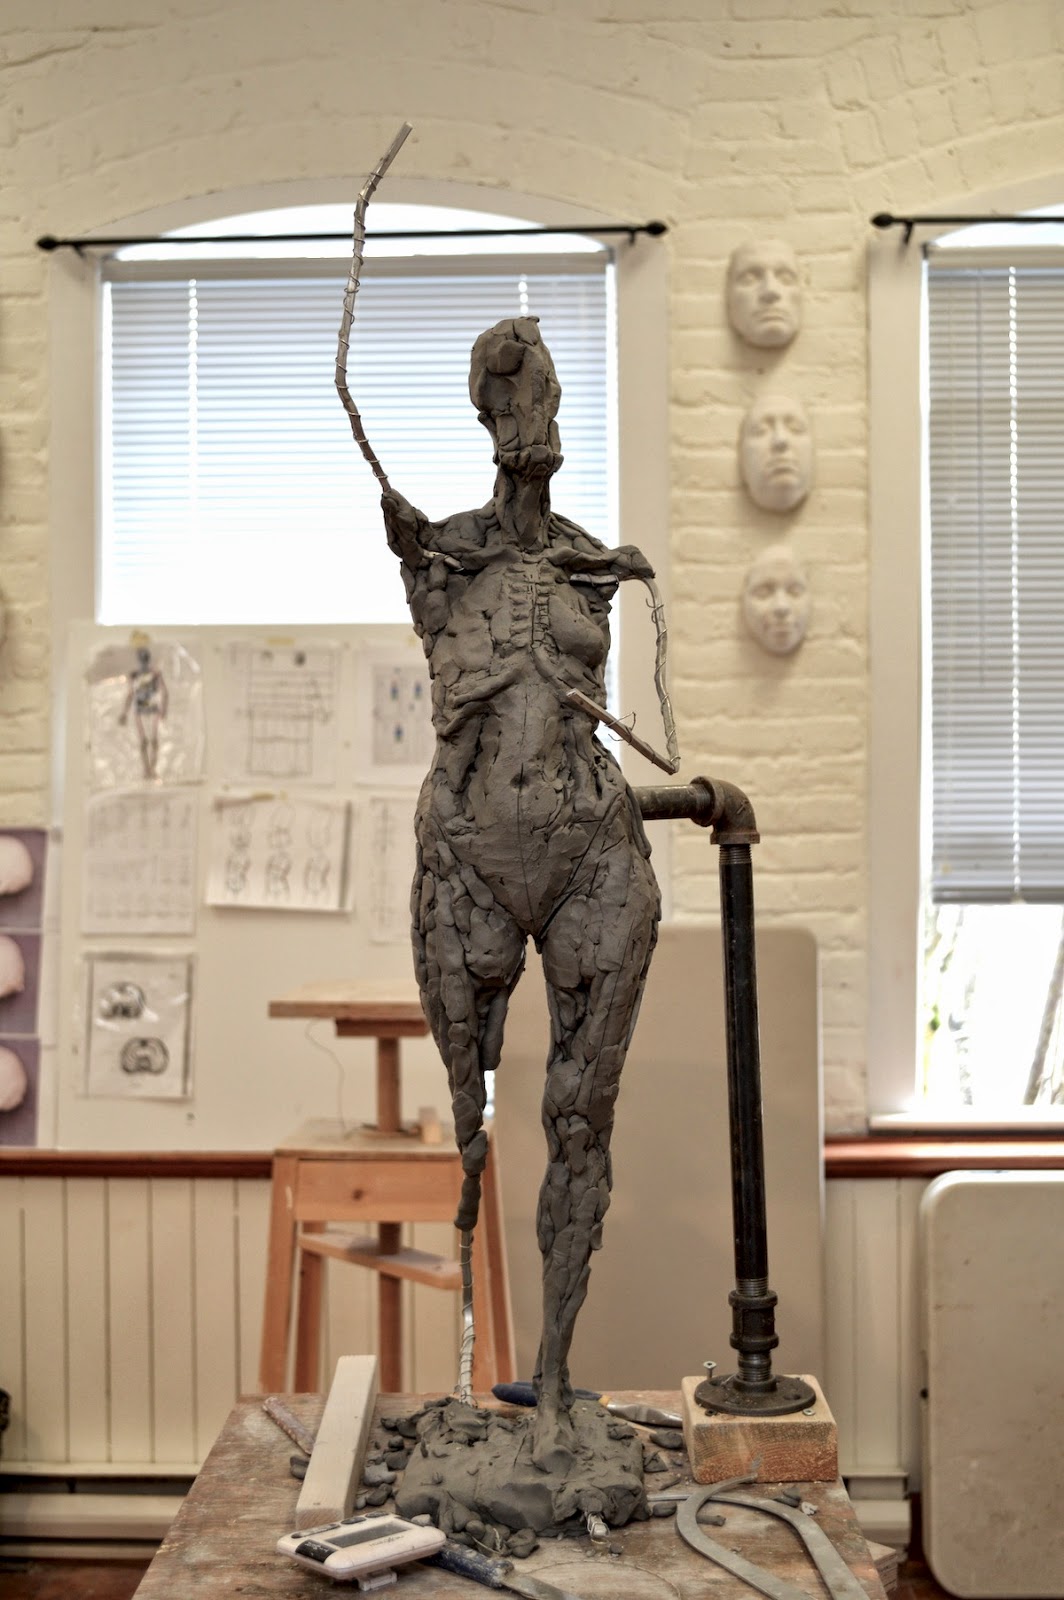 Figurative Sculpture - Melanie Furtado: February 20151064 x 1600